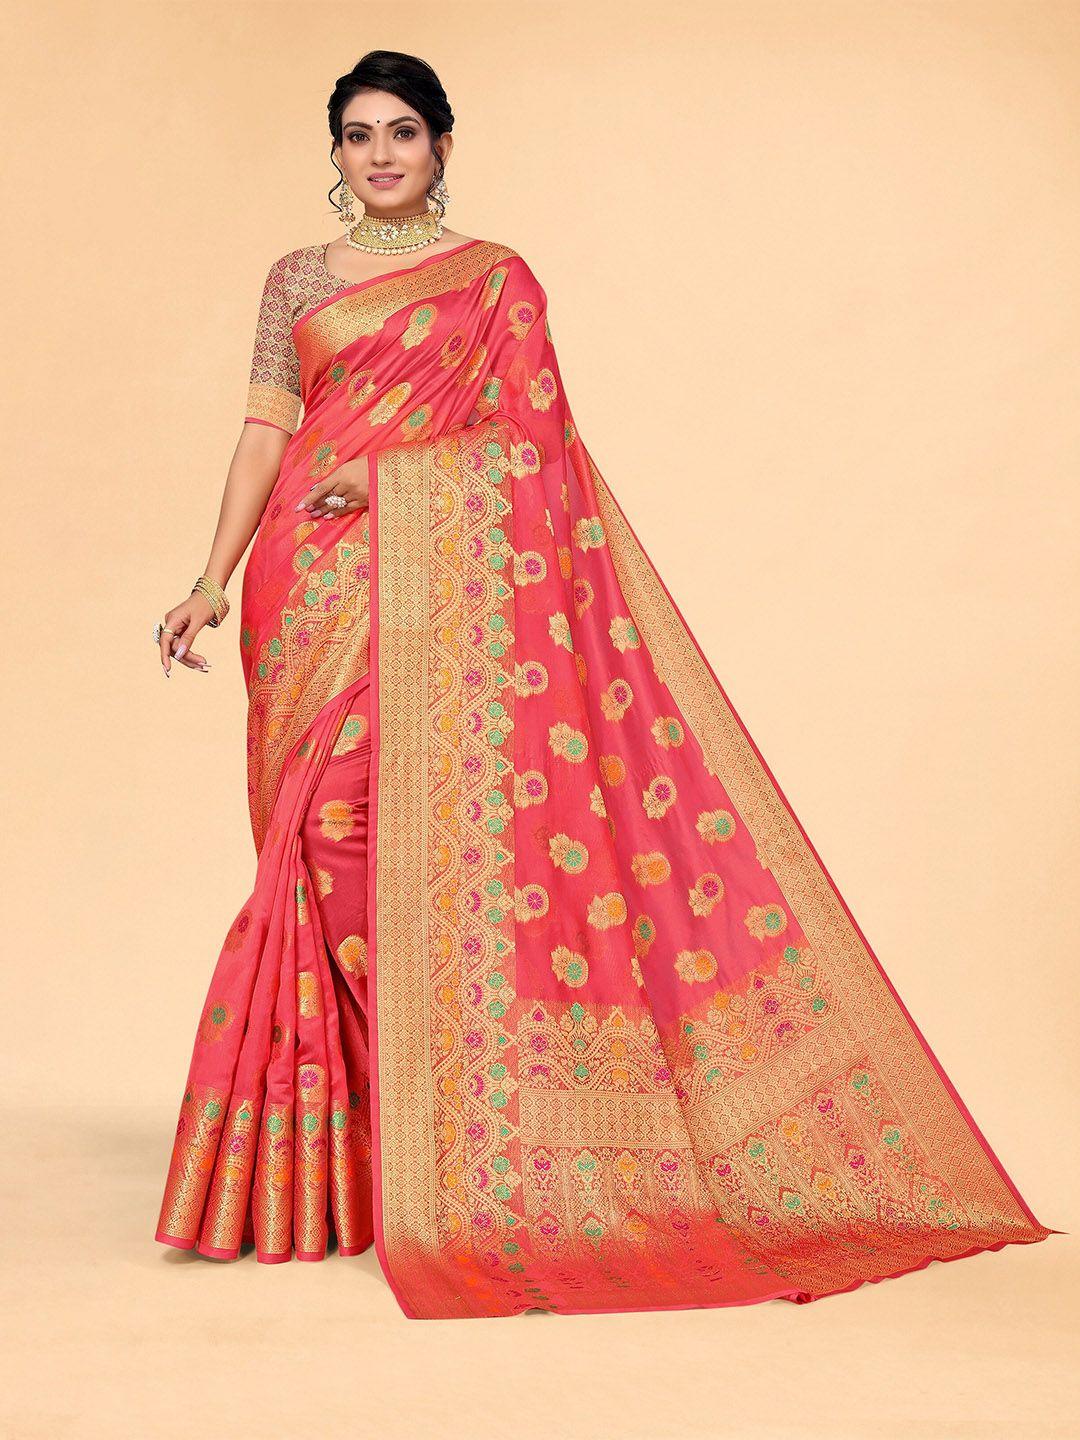 all-about-you-pink-&-gold-toned-floral-organza-kanjeevaram-saree